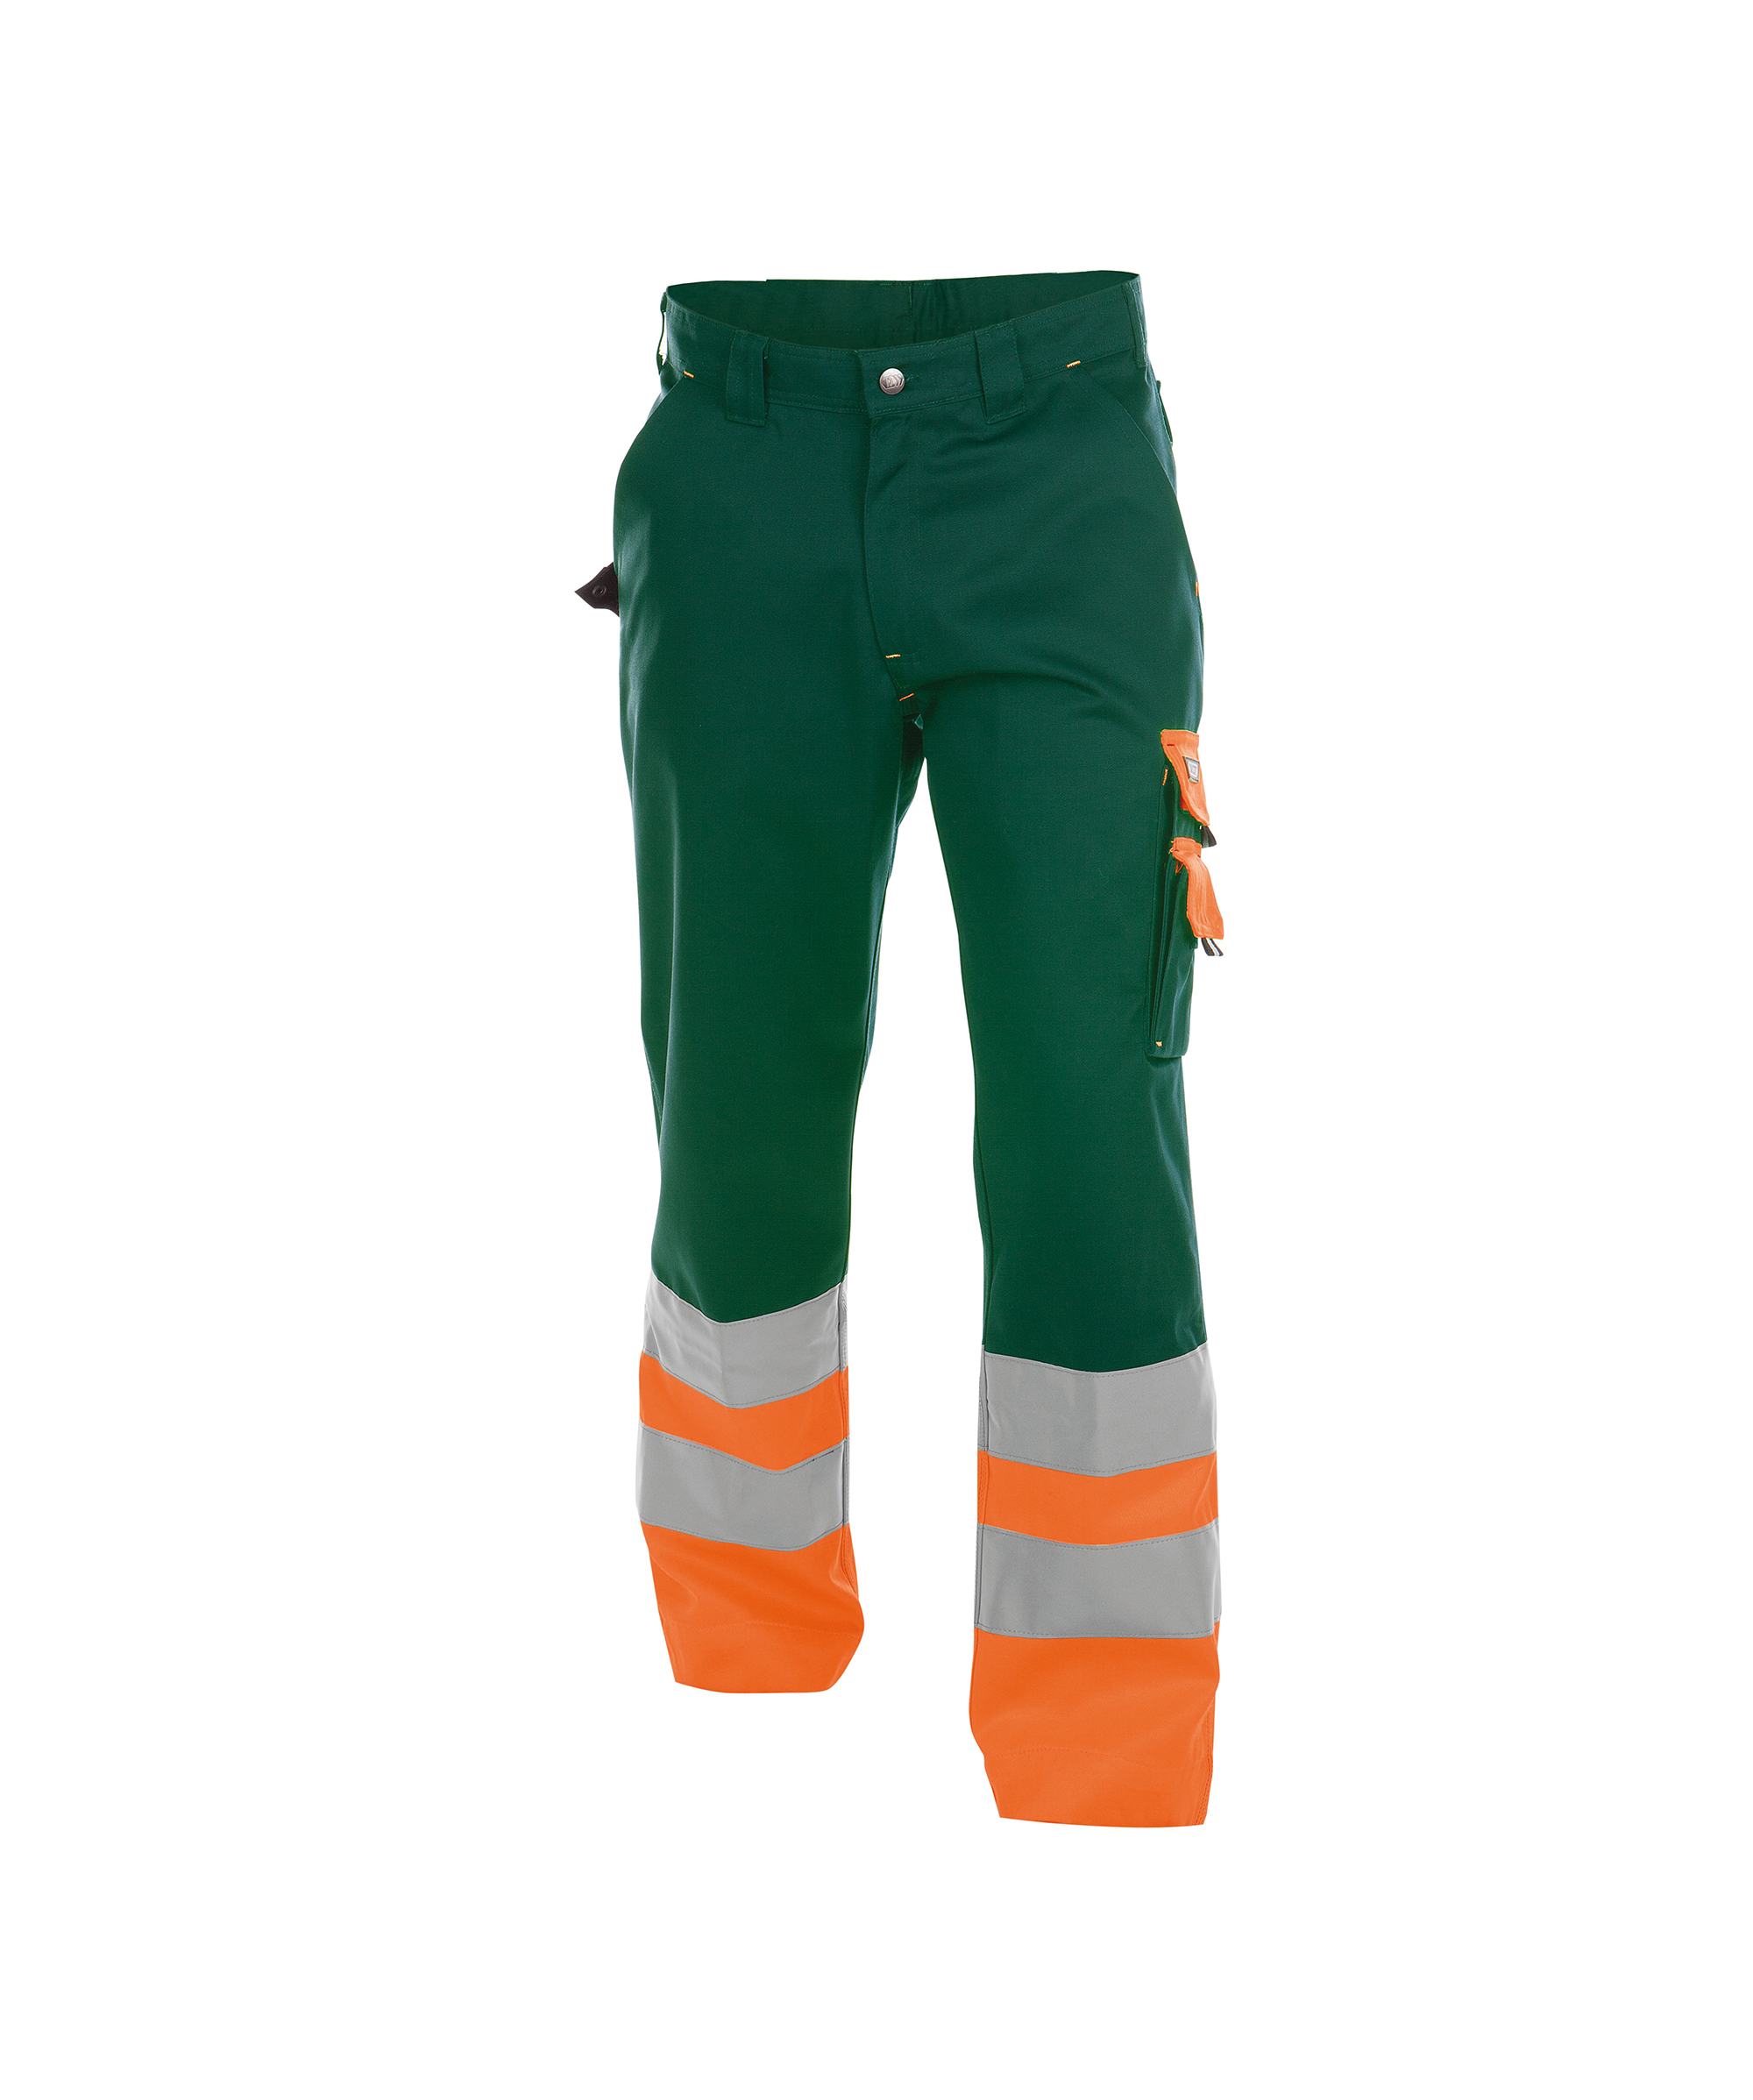 omaha_high-visibility-work-trousers_bottle-green-fluo-orange_front.jpg